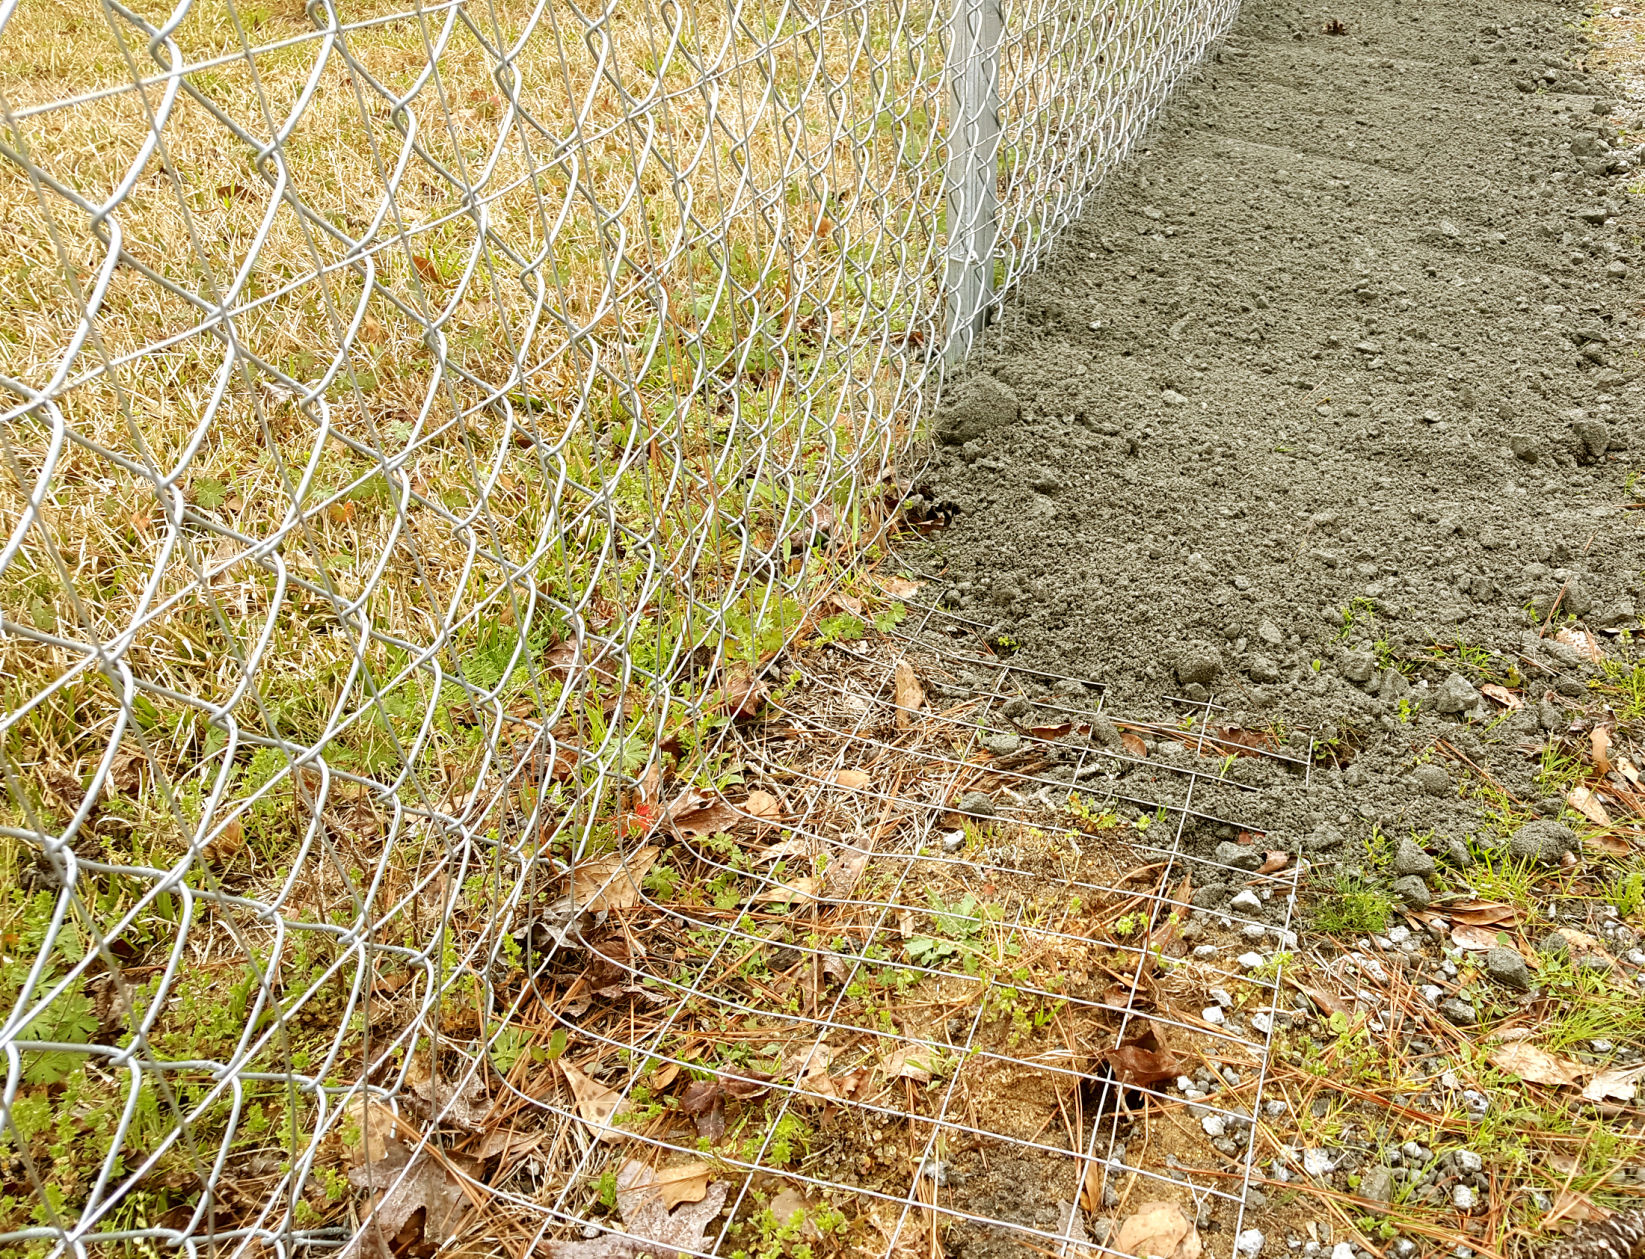 GREG PRYOR Rabbit-proof fence design seems to be working